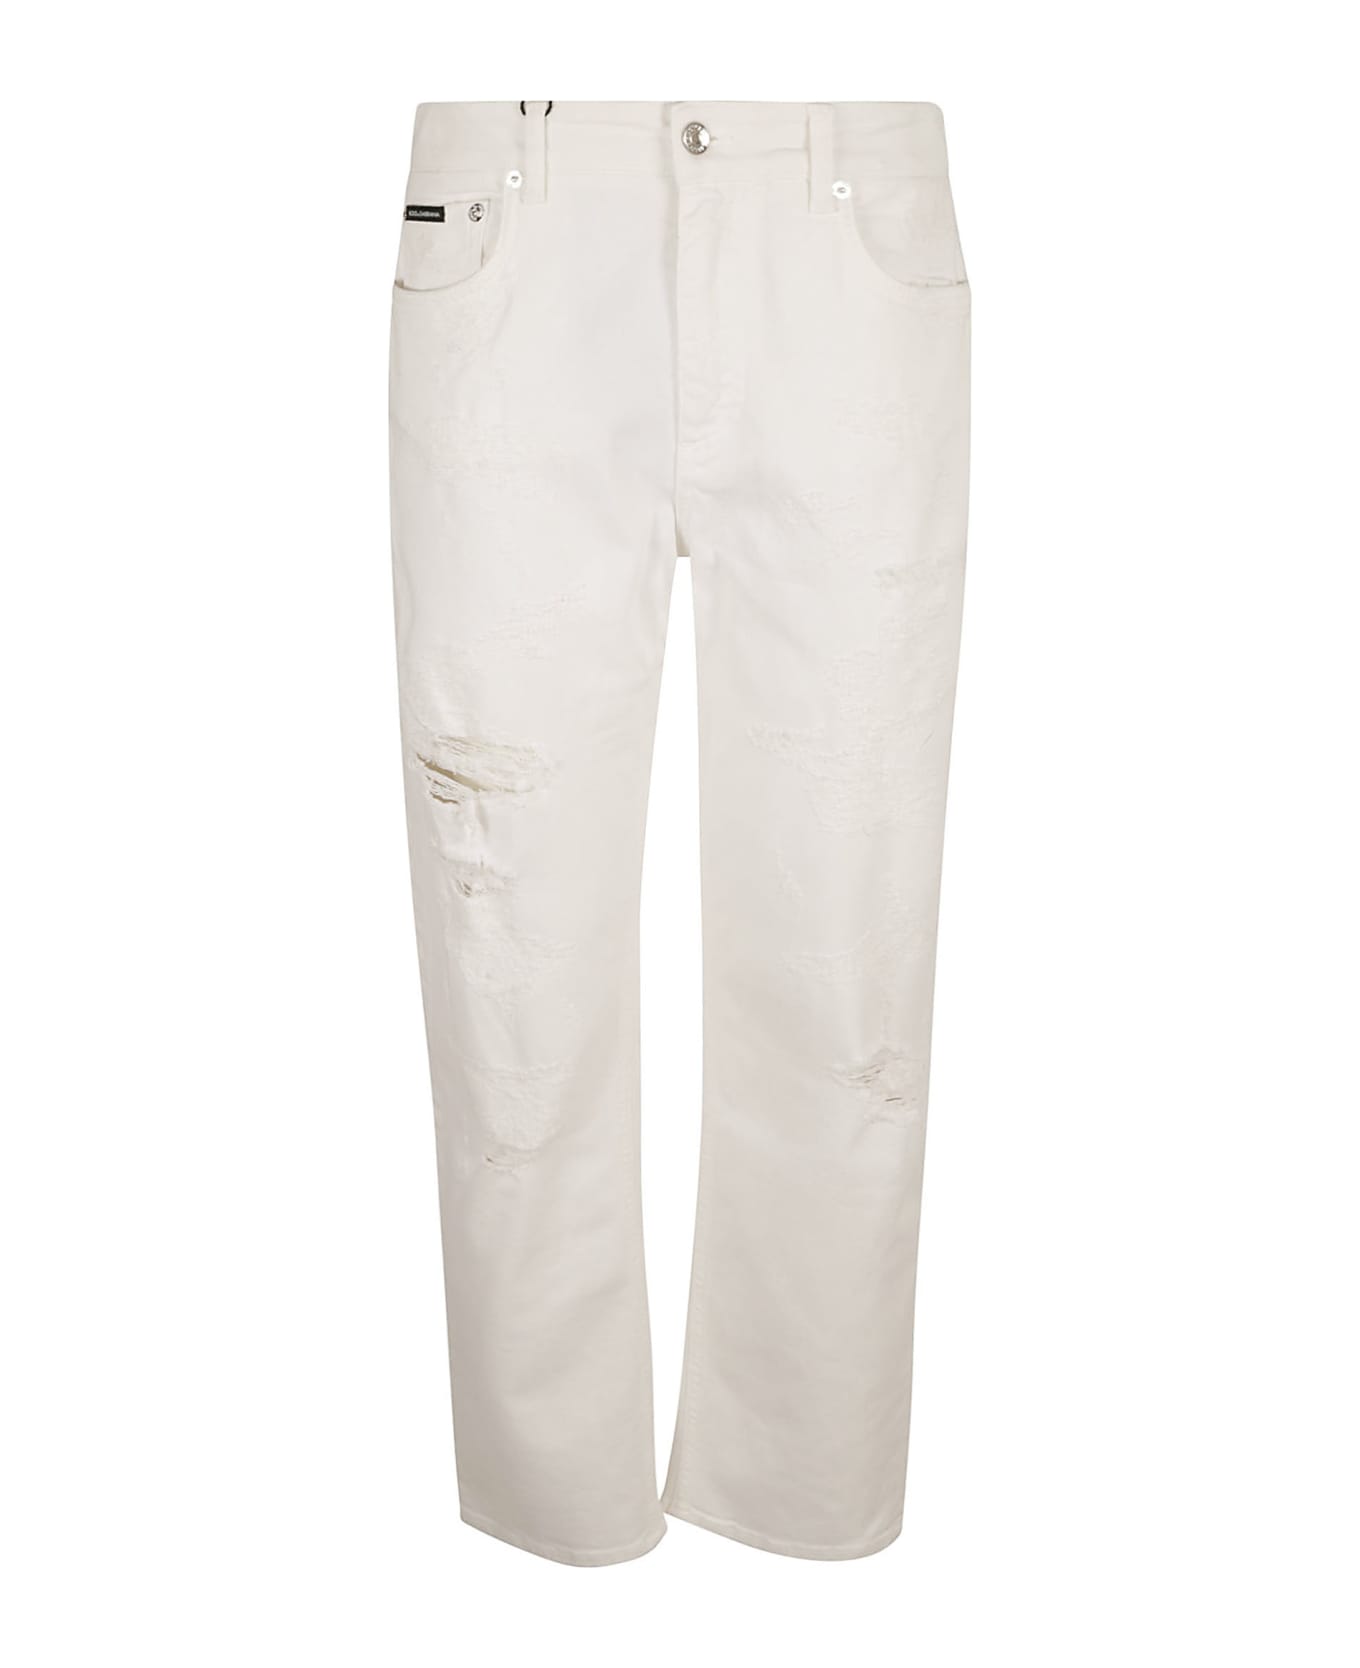 Dolce & Gabbana Distressed Effect 5 Pockets Jeans - VARIANTE ABBINATA